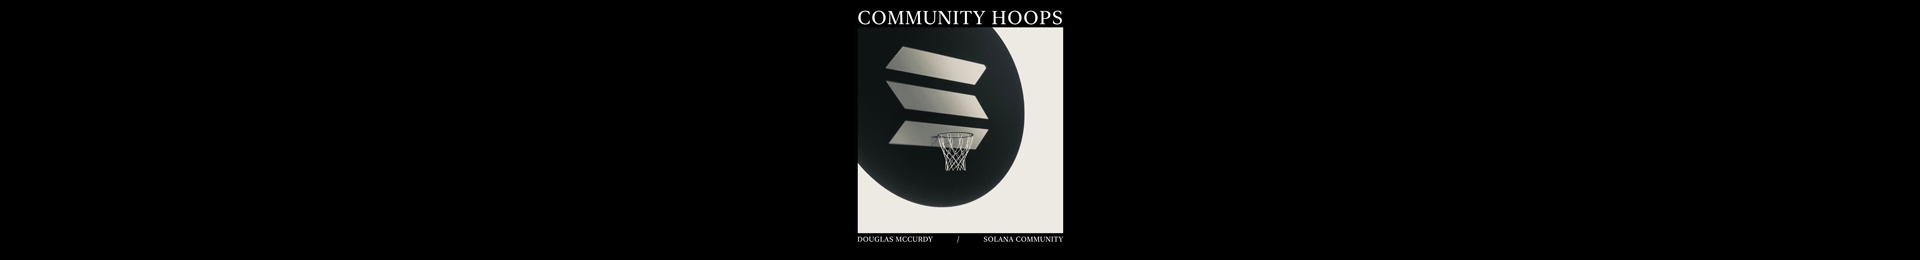 Community Hoops banner